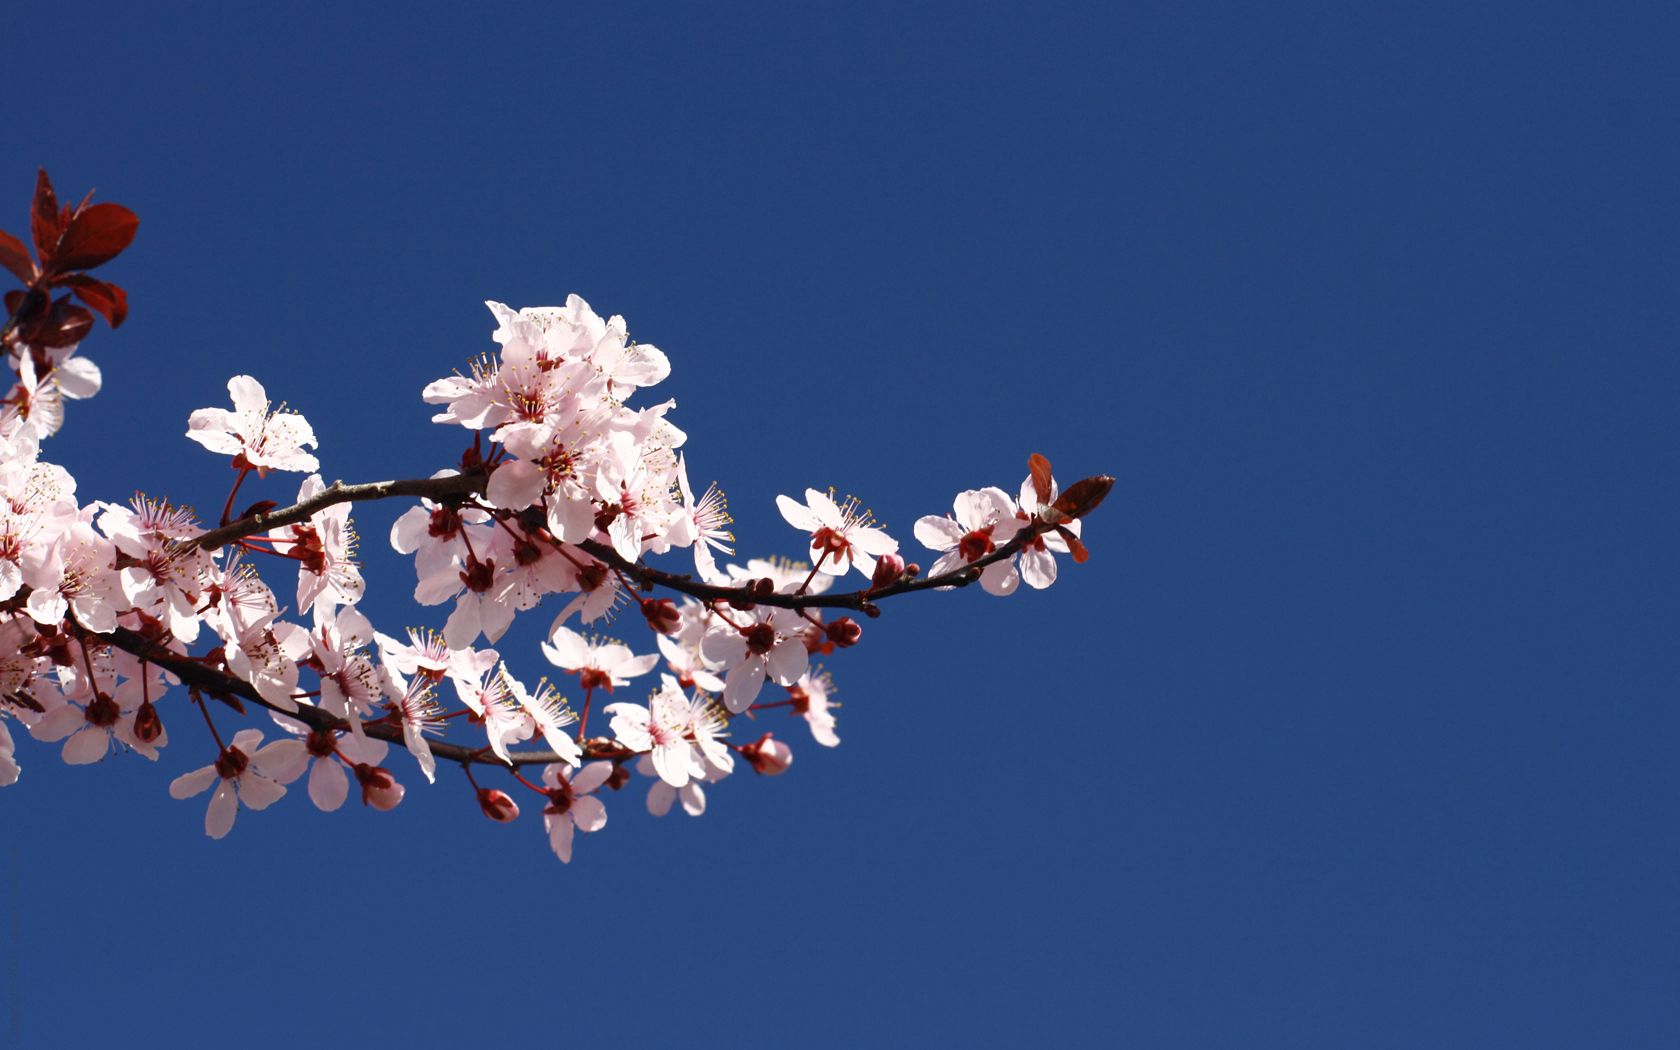 120441 Заставки и Обои Весна на телефон. Скачать цветение, ветка, синева, небо картинки бесплатно